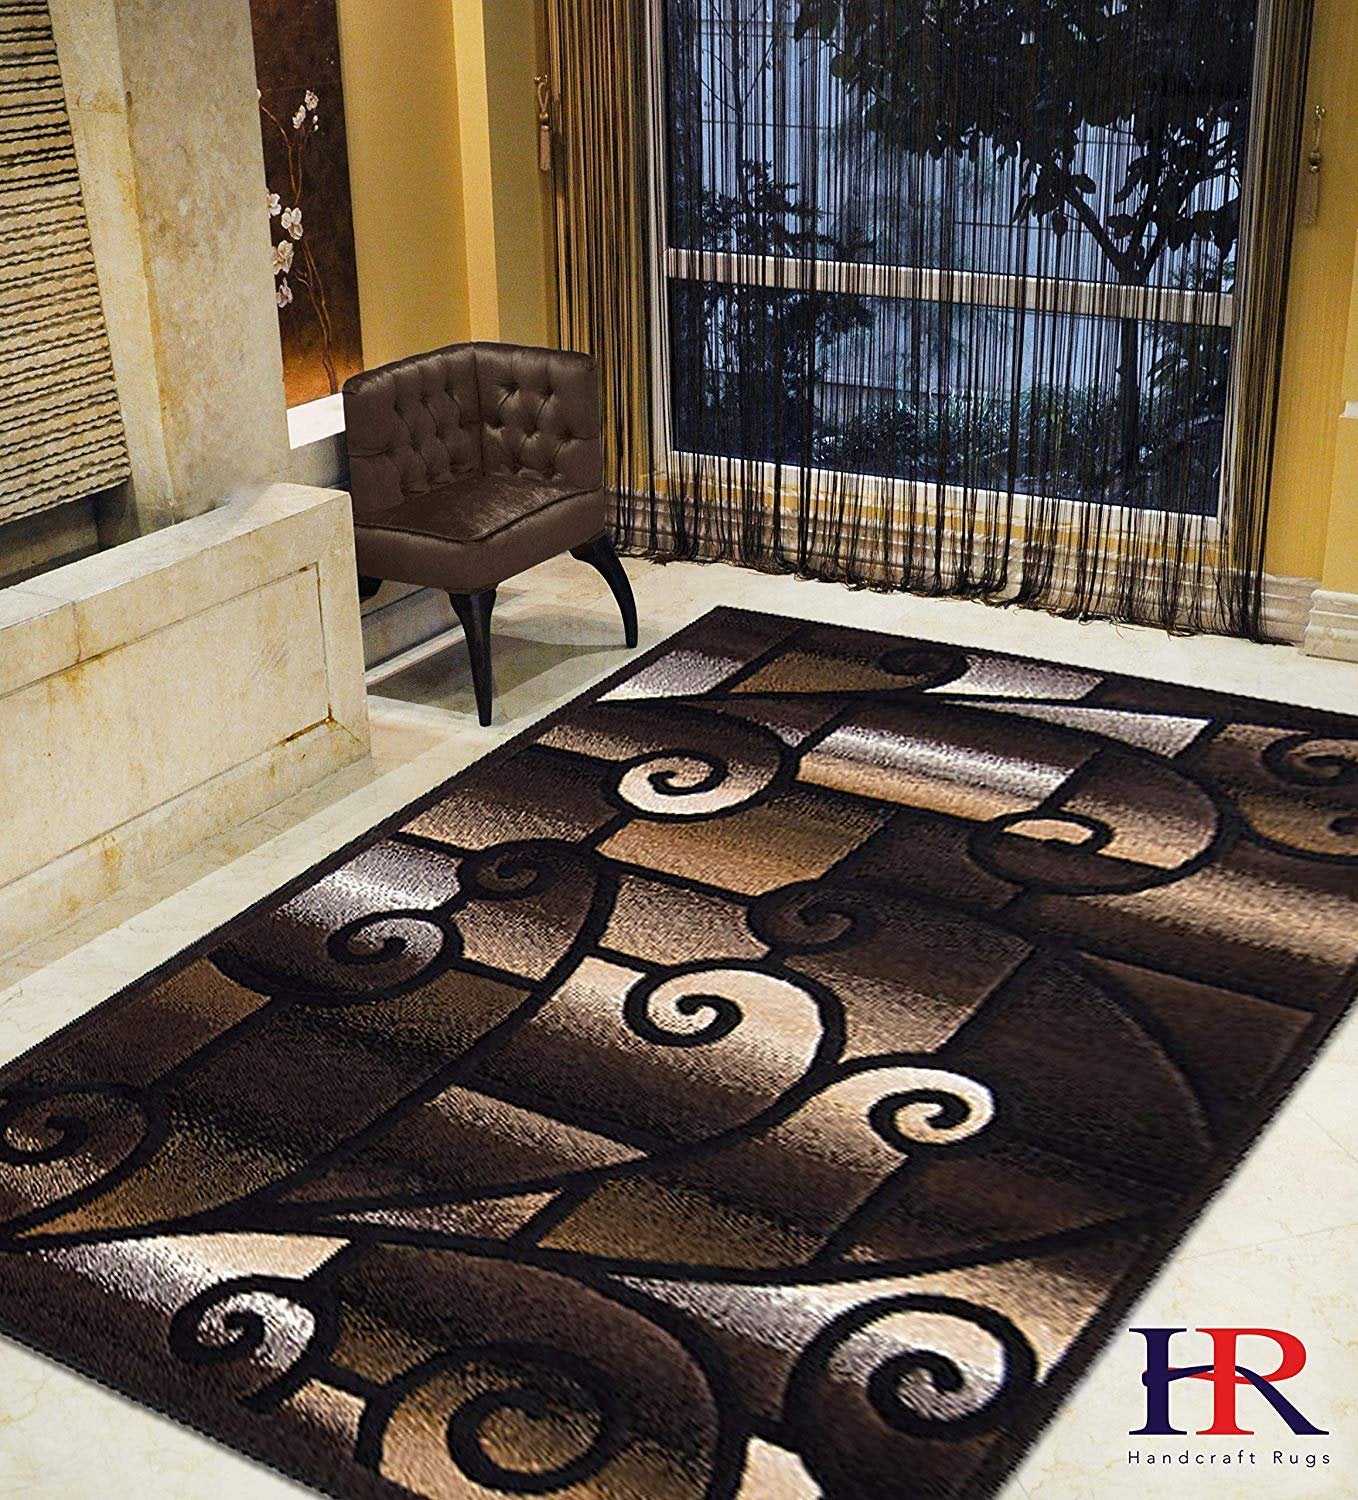 HR-Modern Living Room Rugs-Abstract Carpet with Geometric Swirls Pattern-Black/Beige/Ivory/Chocolate (1'96"x 3'3")